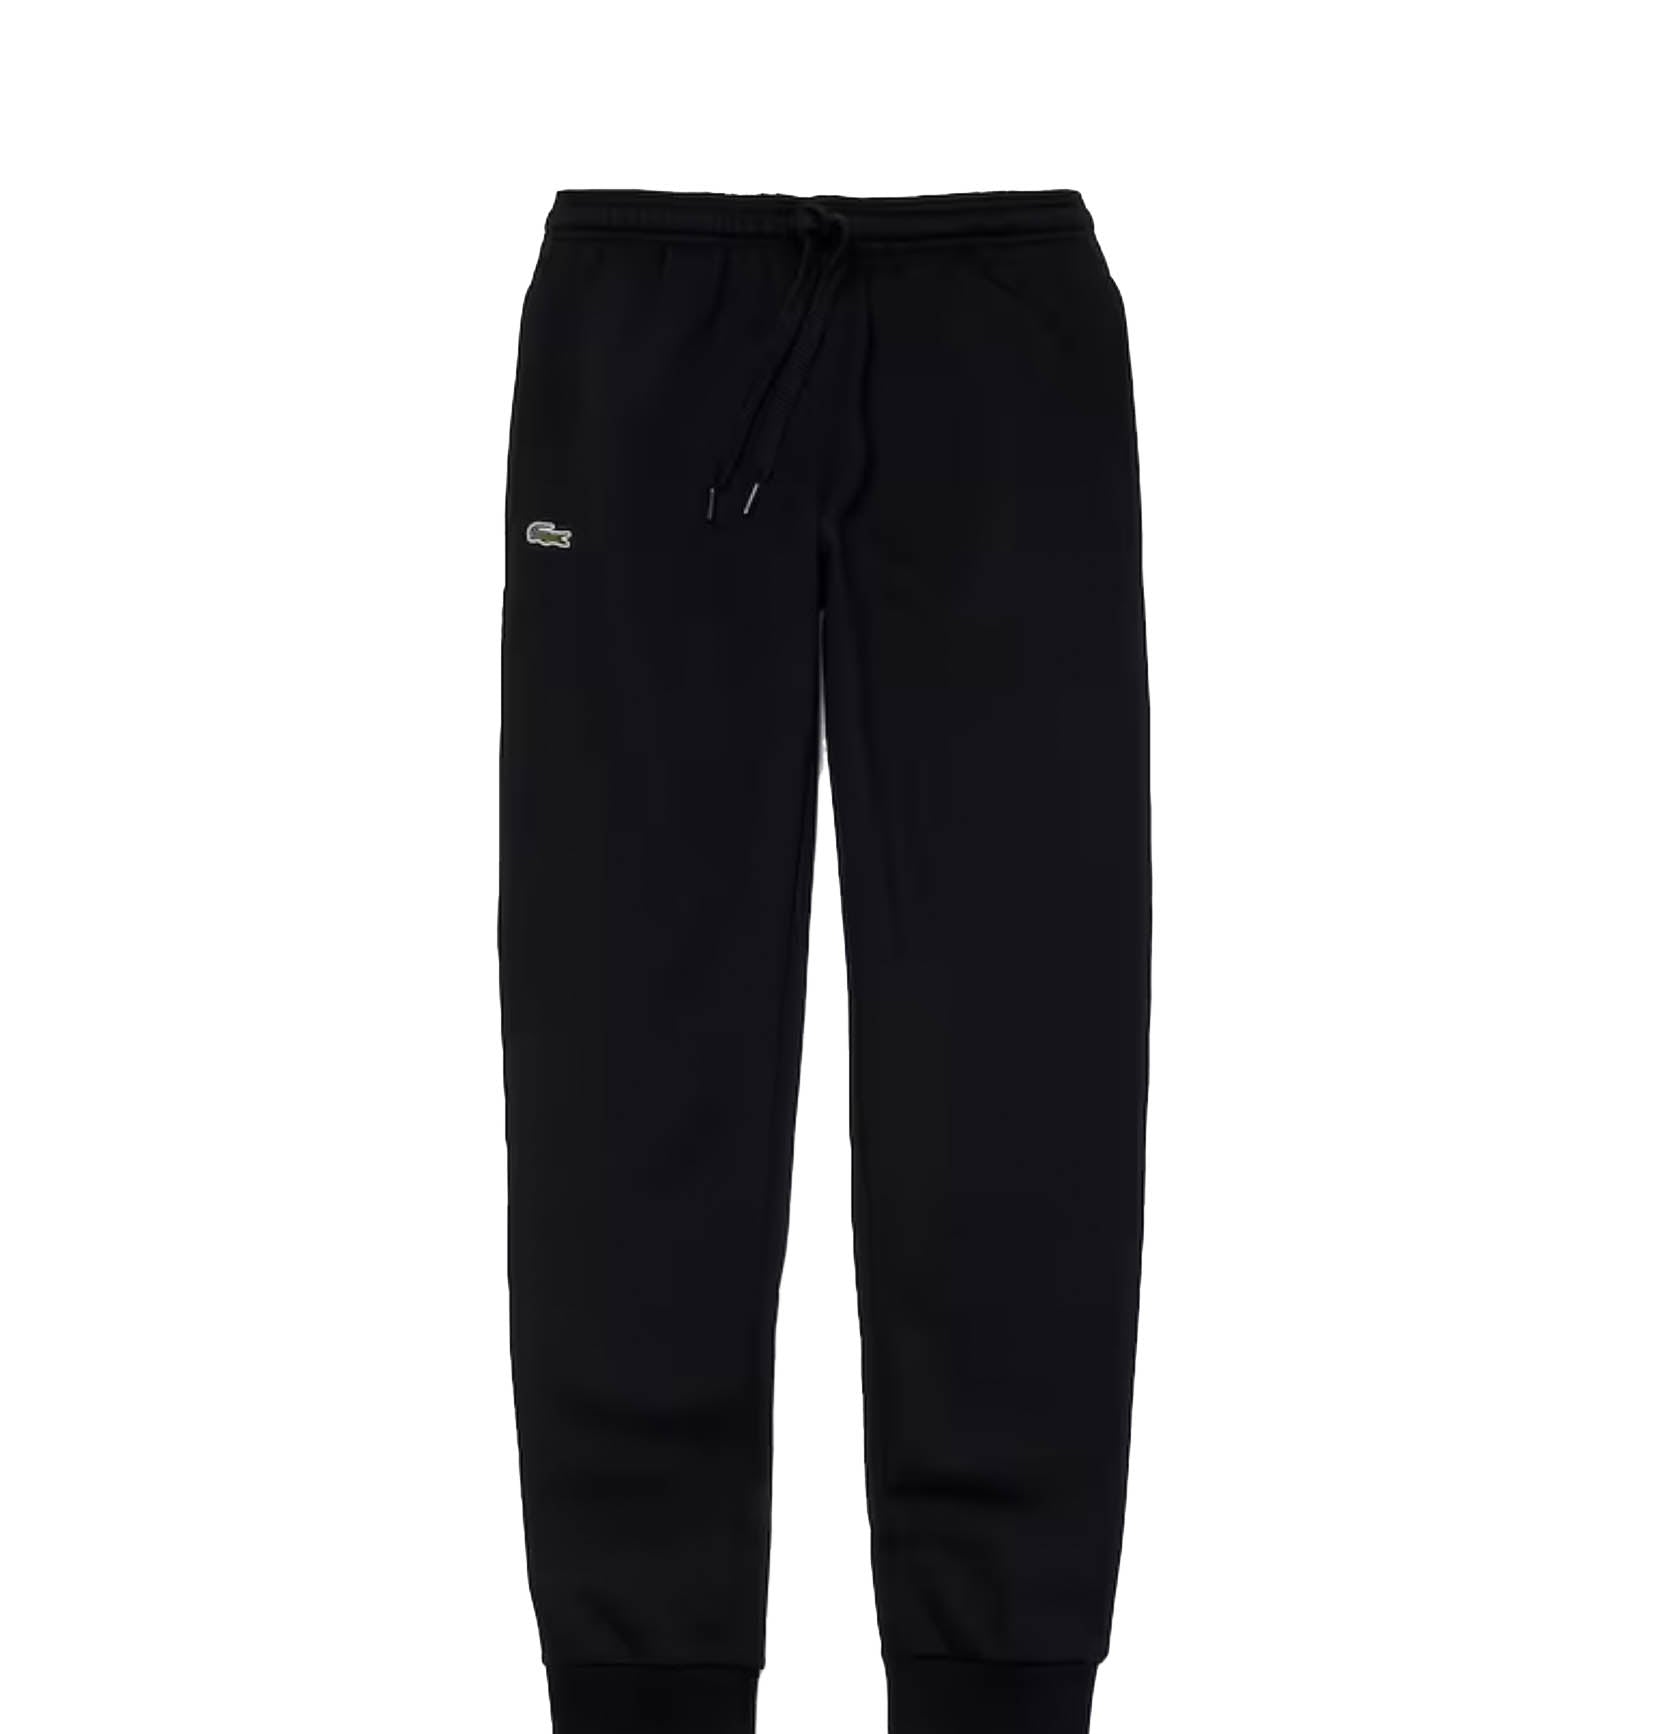 Men's SPORT Fleece Tennis Sweatpants - Men's Sweatpants & Trousers